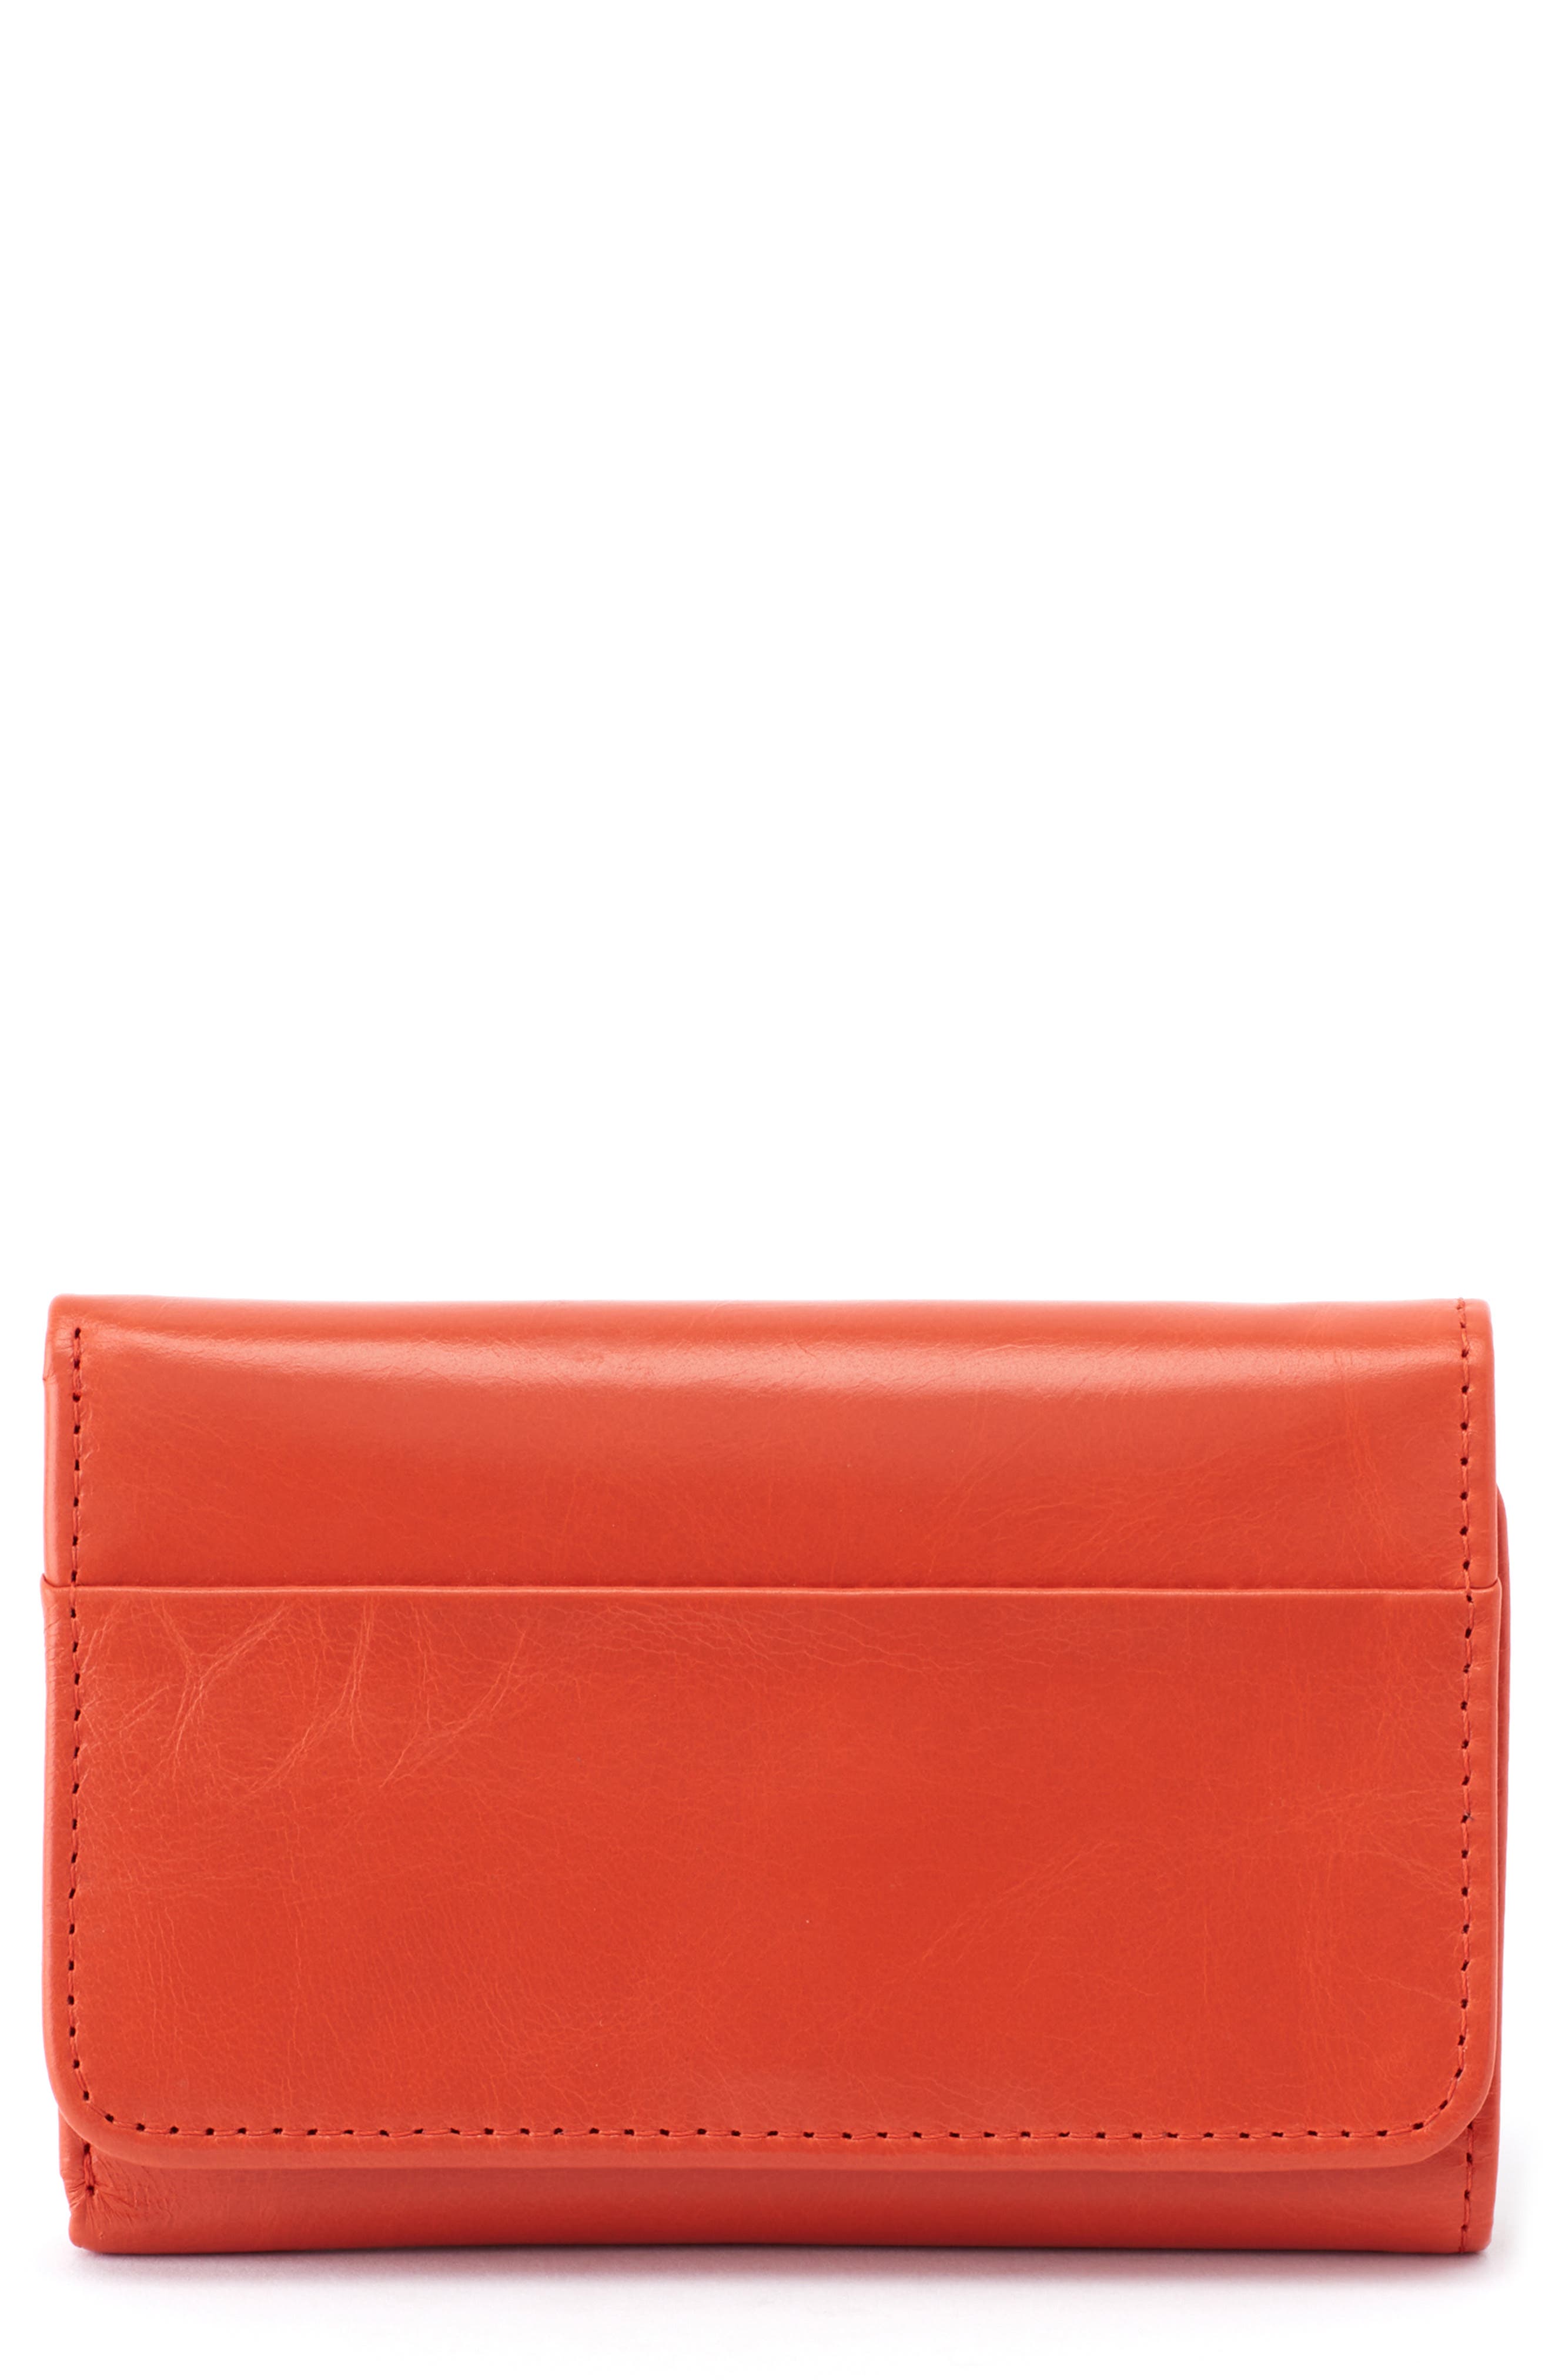 Fruit Orange Art Wallet Real Leather Purse Credit Card Holder for Women Phone Girl